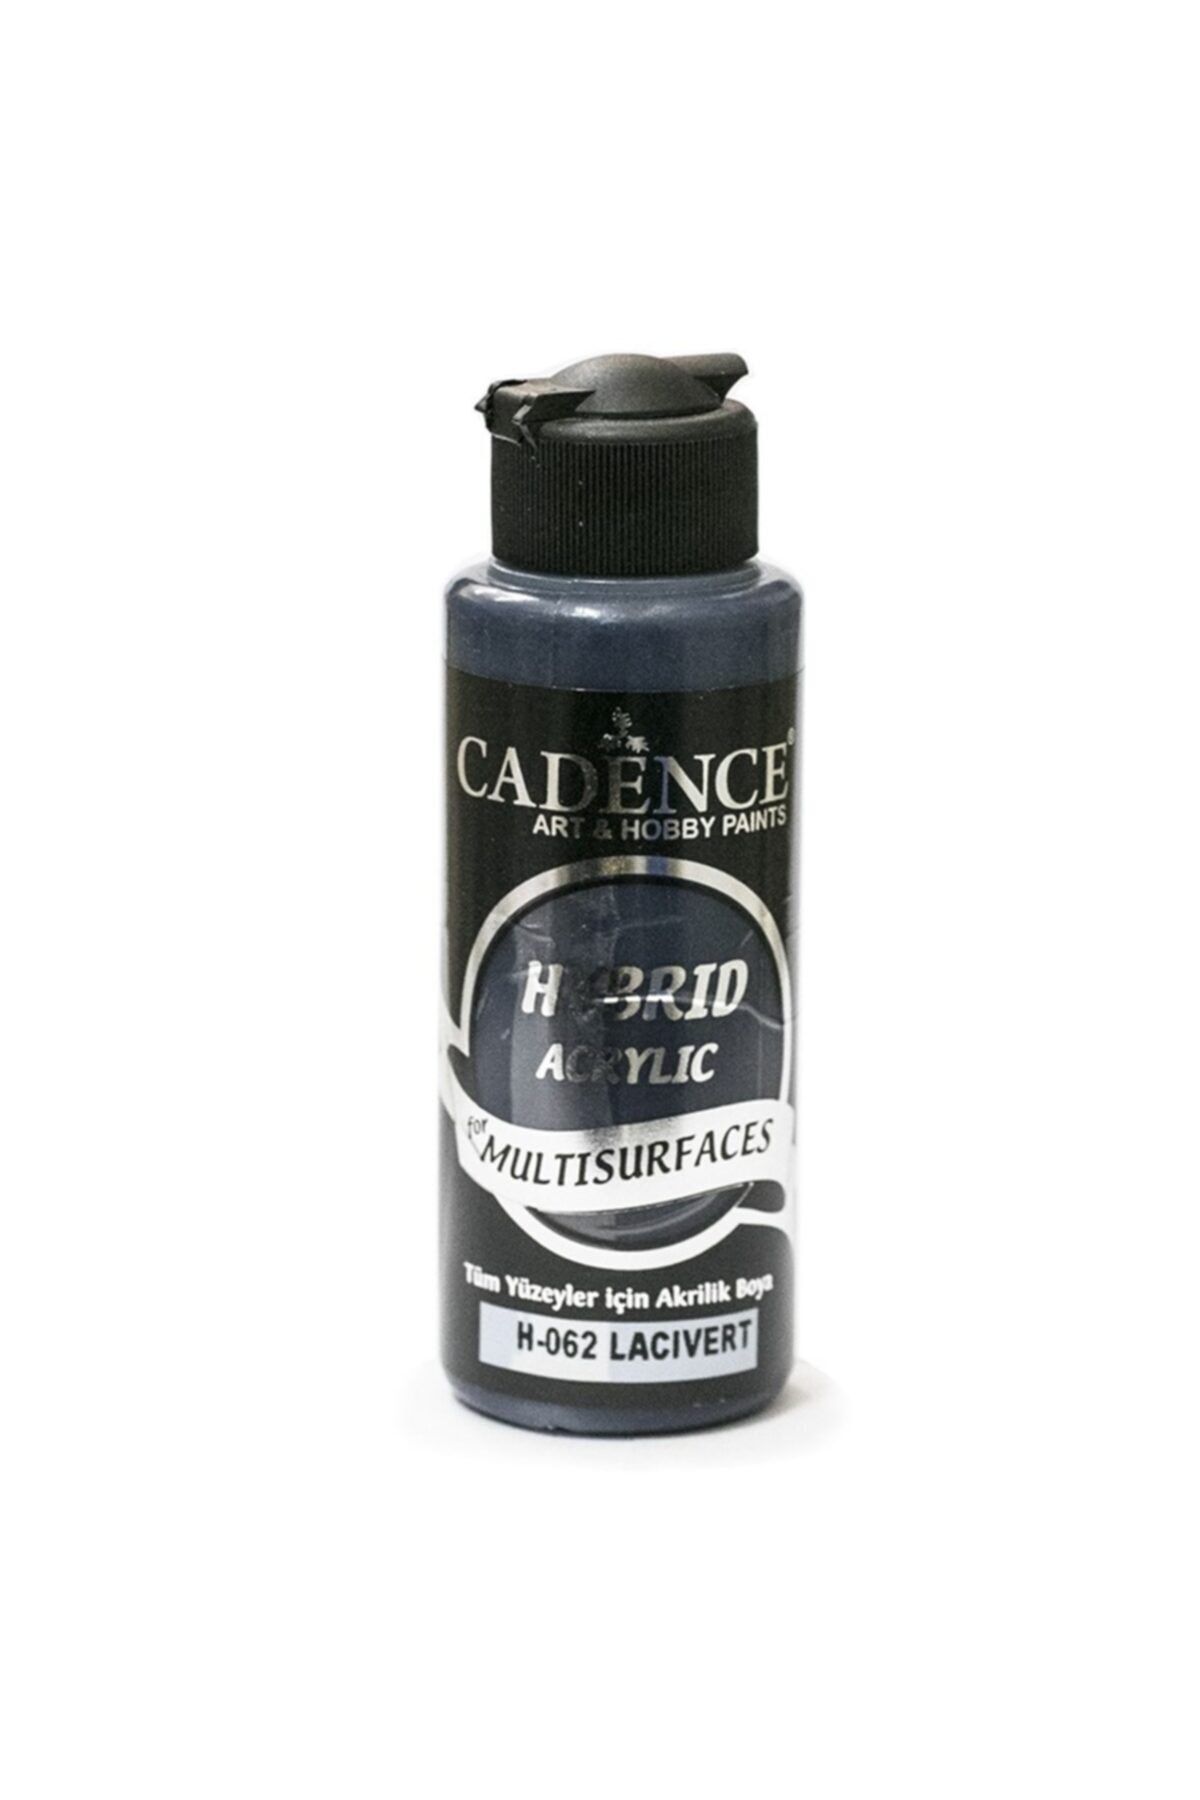 Cadence Lacivert Multisurface Hibrit Boya H062 120 ml